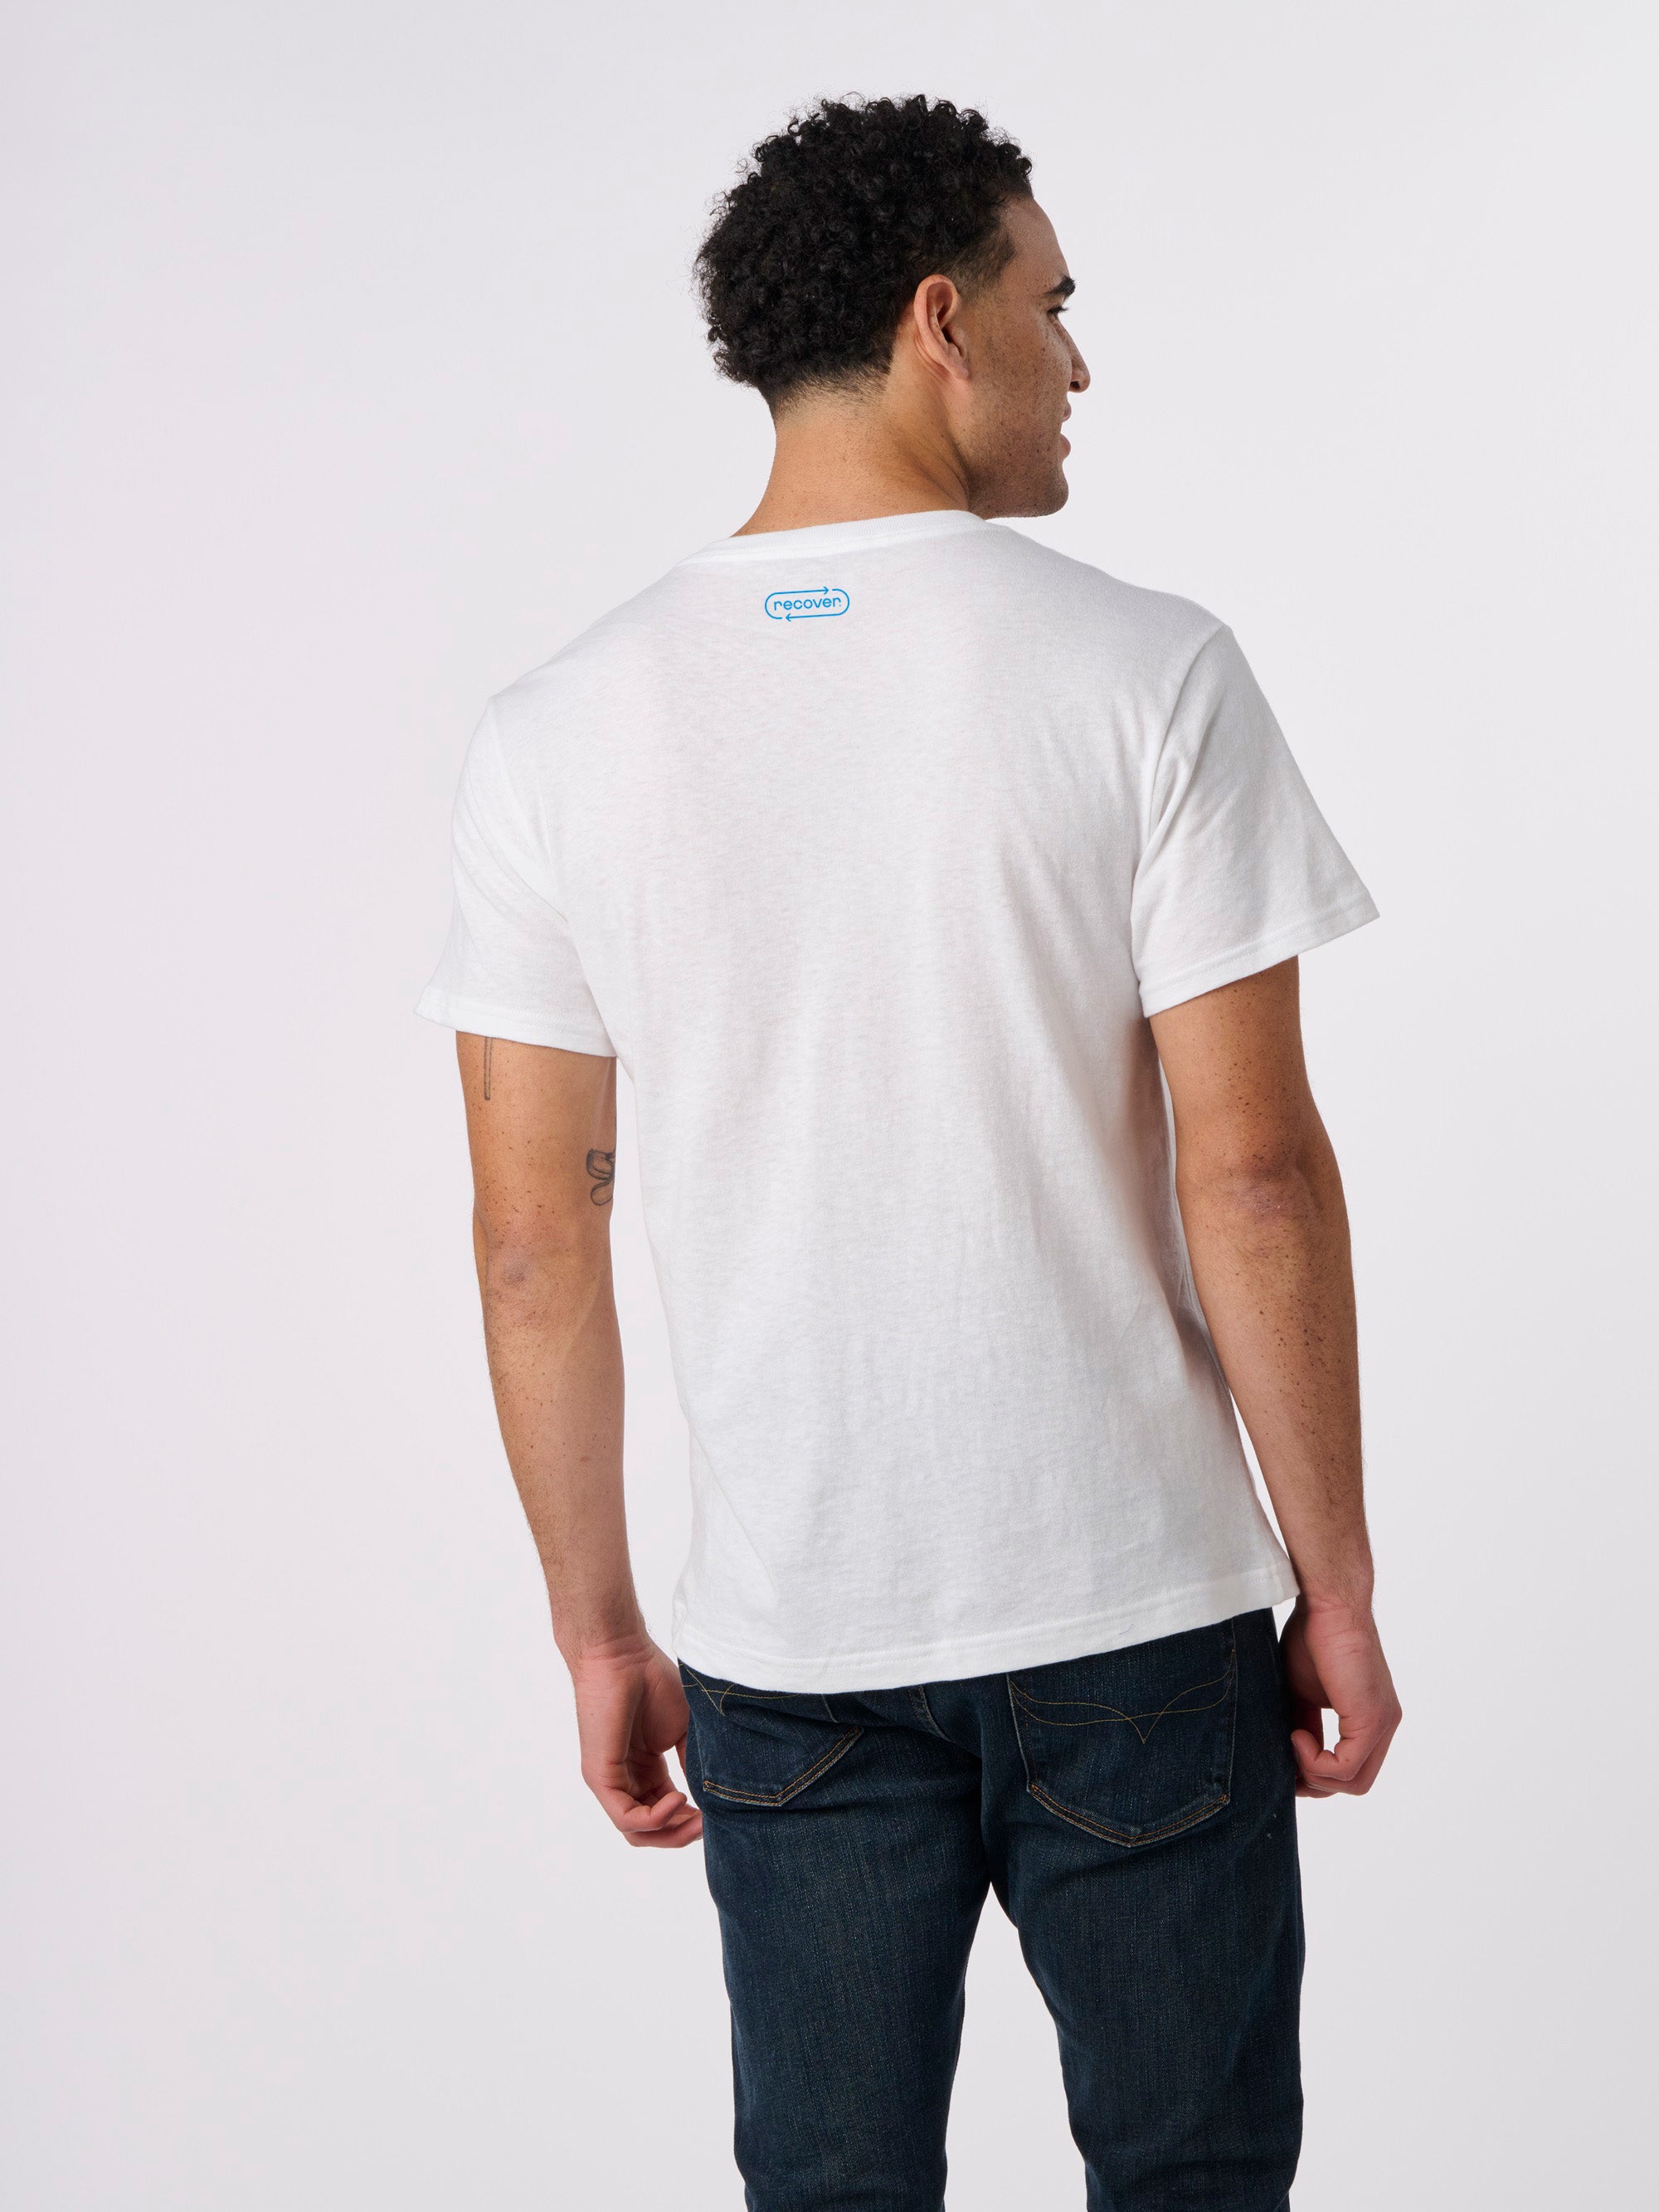 OG100 - Recover Loop Short Sleeve T-Shirt